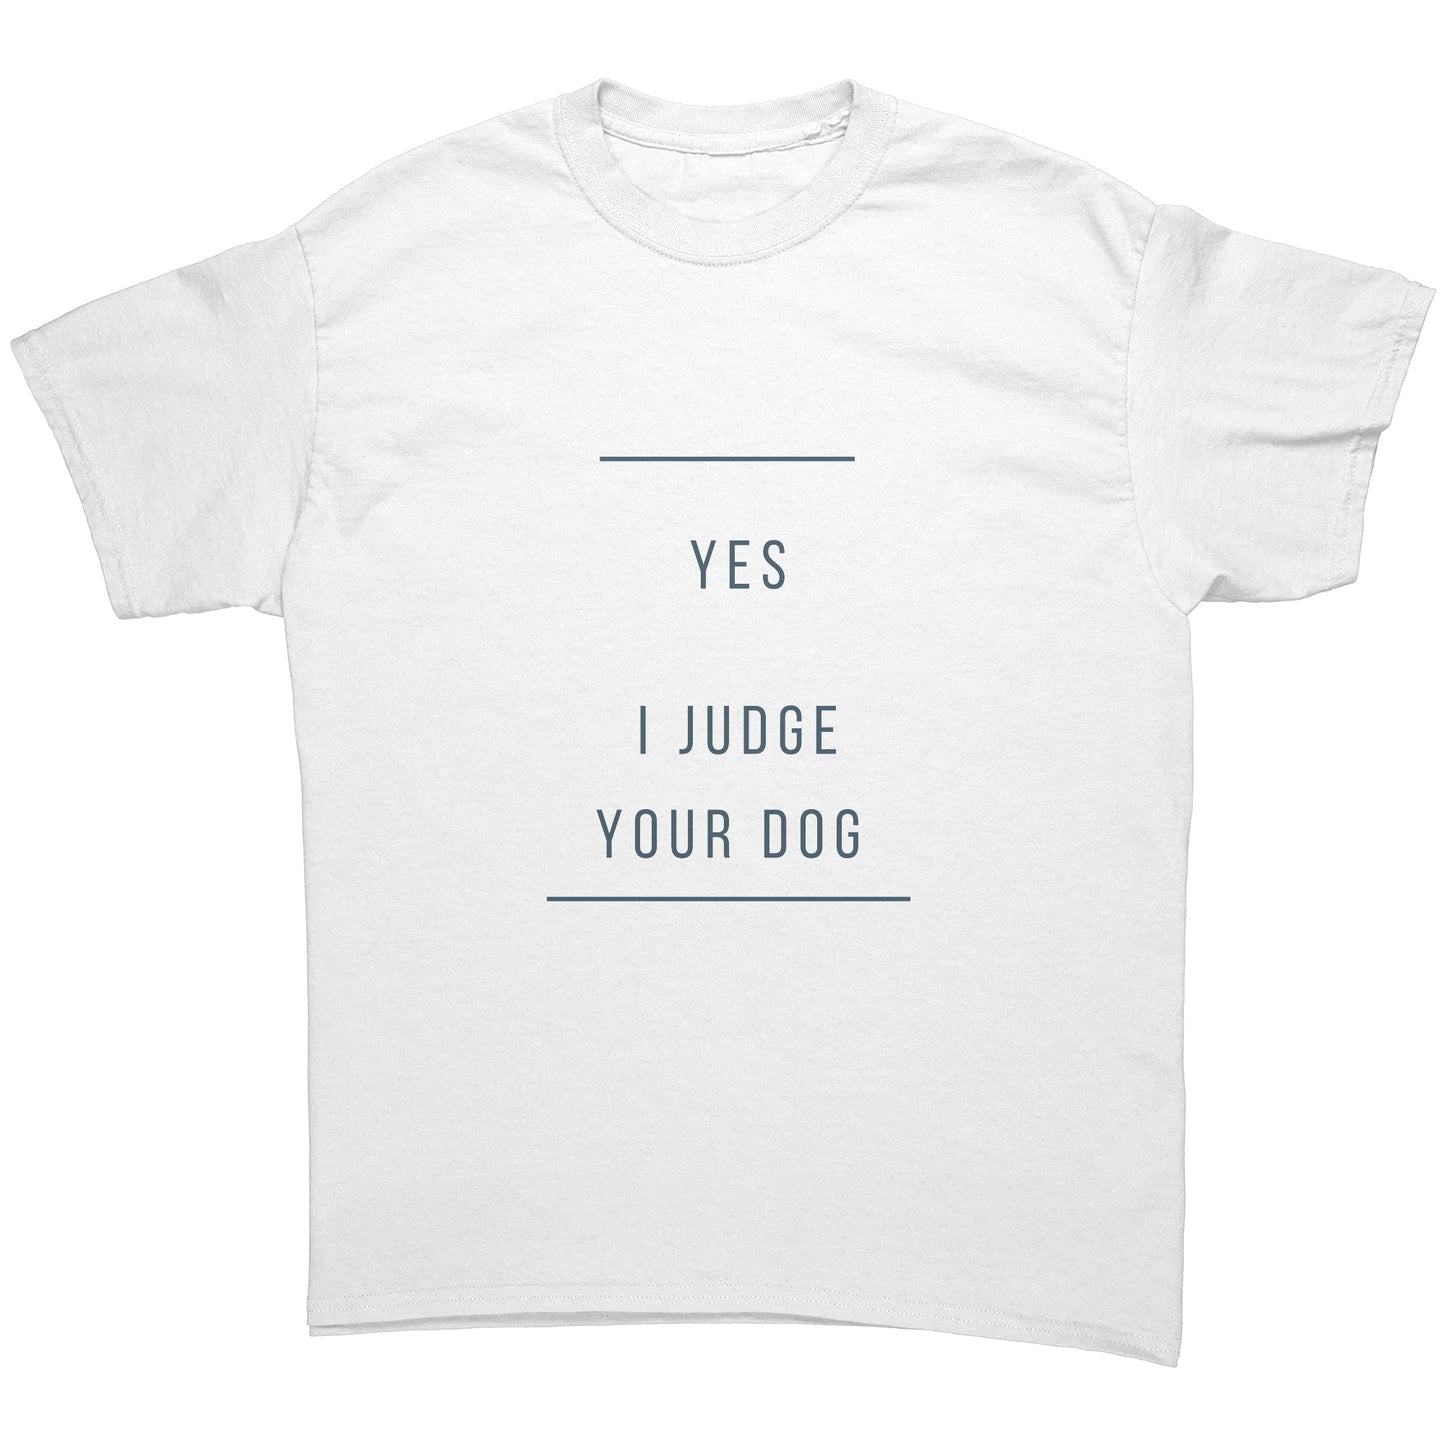 YES I JUDGE YOUR DOG